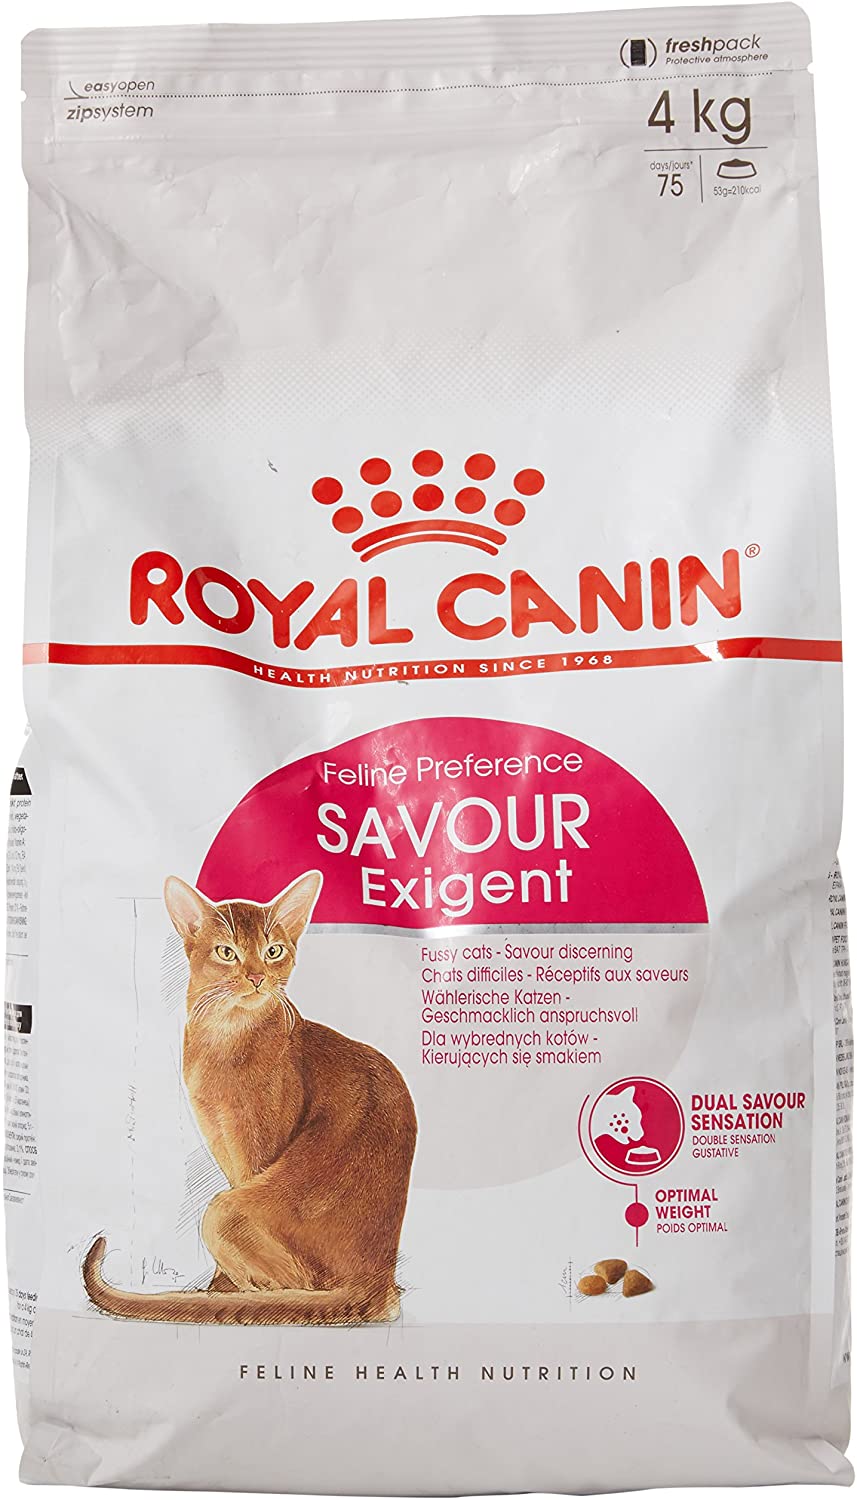  Royal Canin C-58439 Exigent 35/30 Savour - 2 Kg 